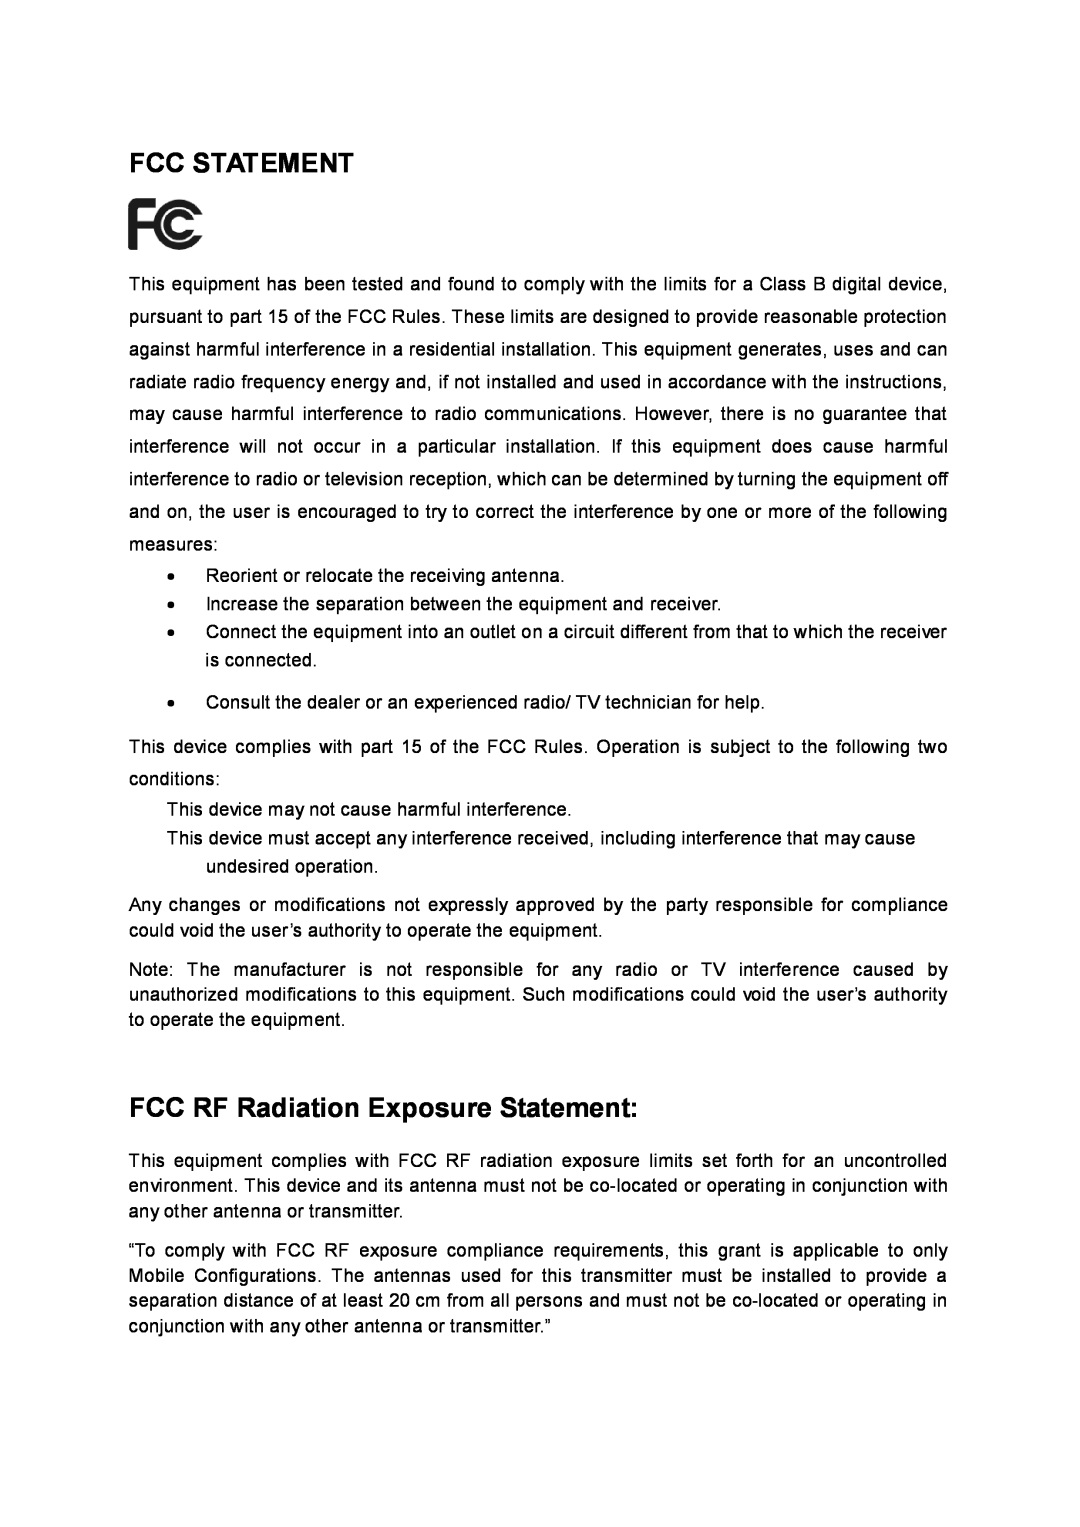 TP-Link Rev 1.0.0 1910010810 manual Fcc Statement, FCC RF Radiation Exposure Statement 